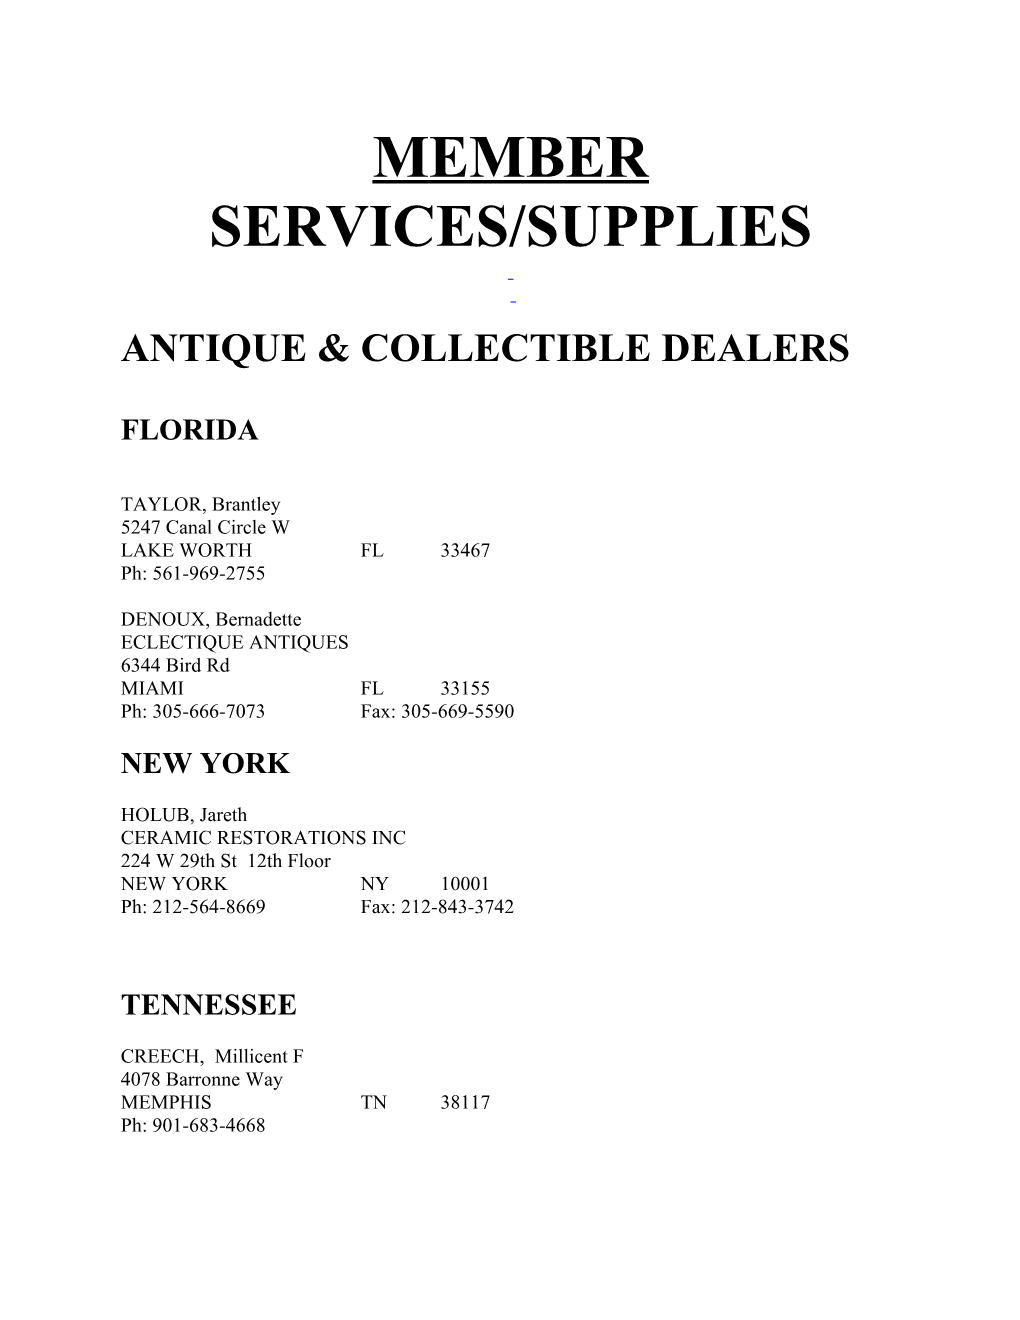 Services/Supplies